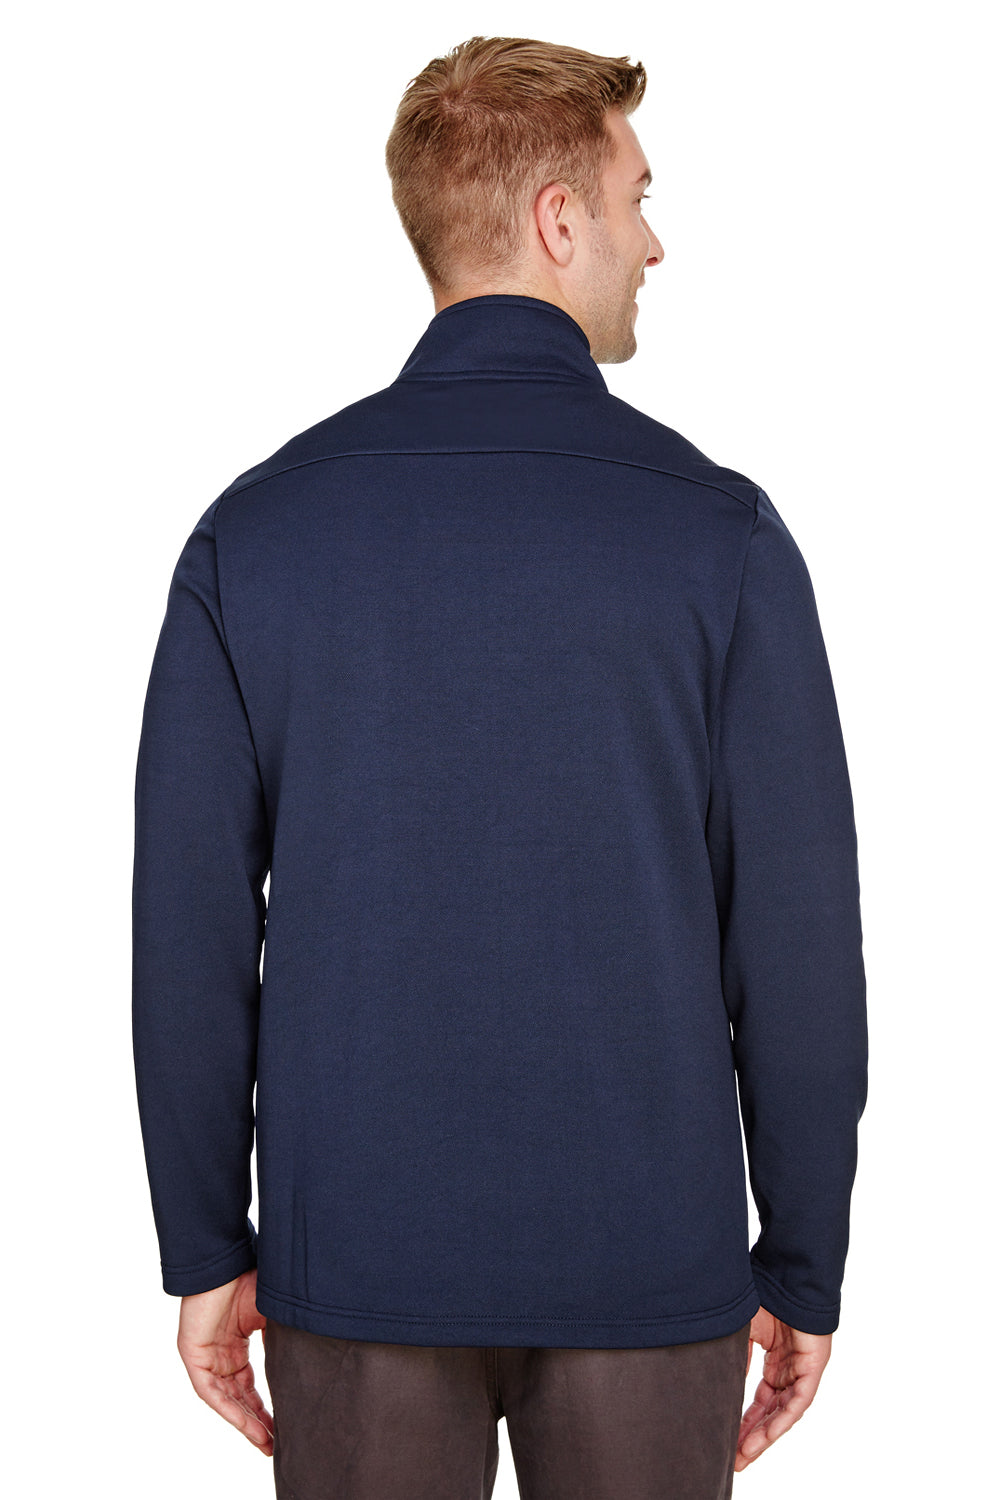 UltraClub UC792 Mens Coastal Performance Moisture Wicking Fleece 1/4 Zip Sweatshirt Navy Blue Back